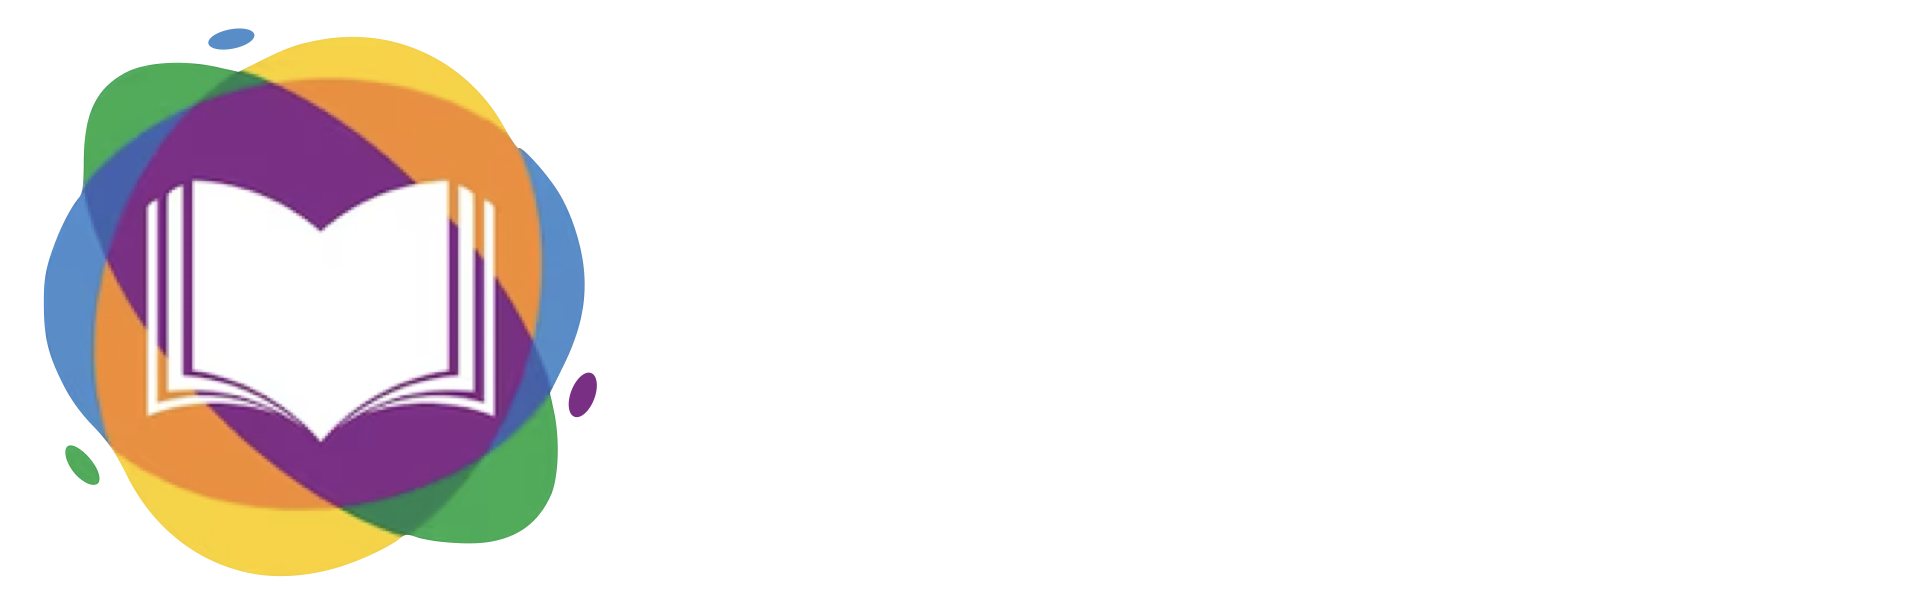 Formation Michel Cardinal